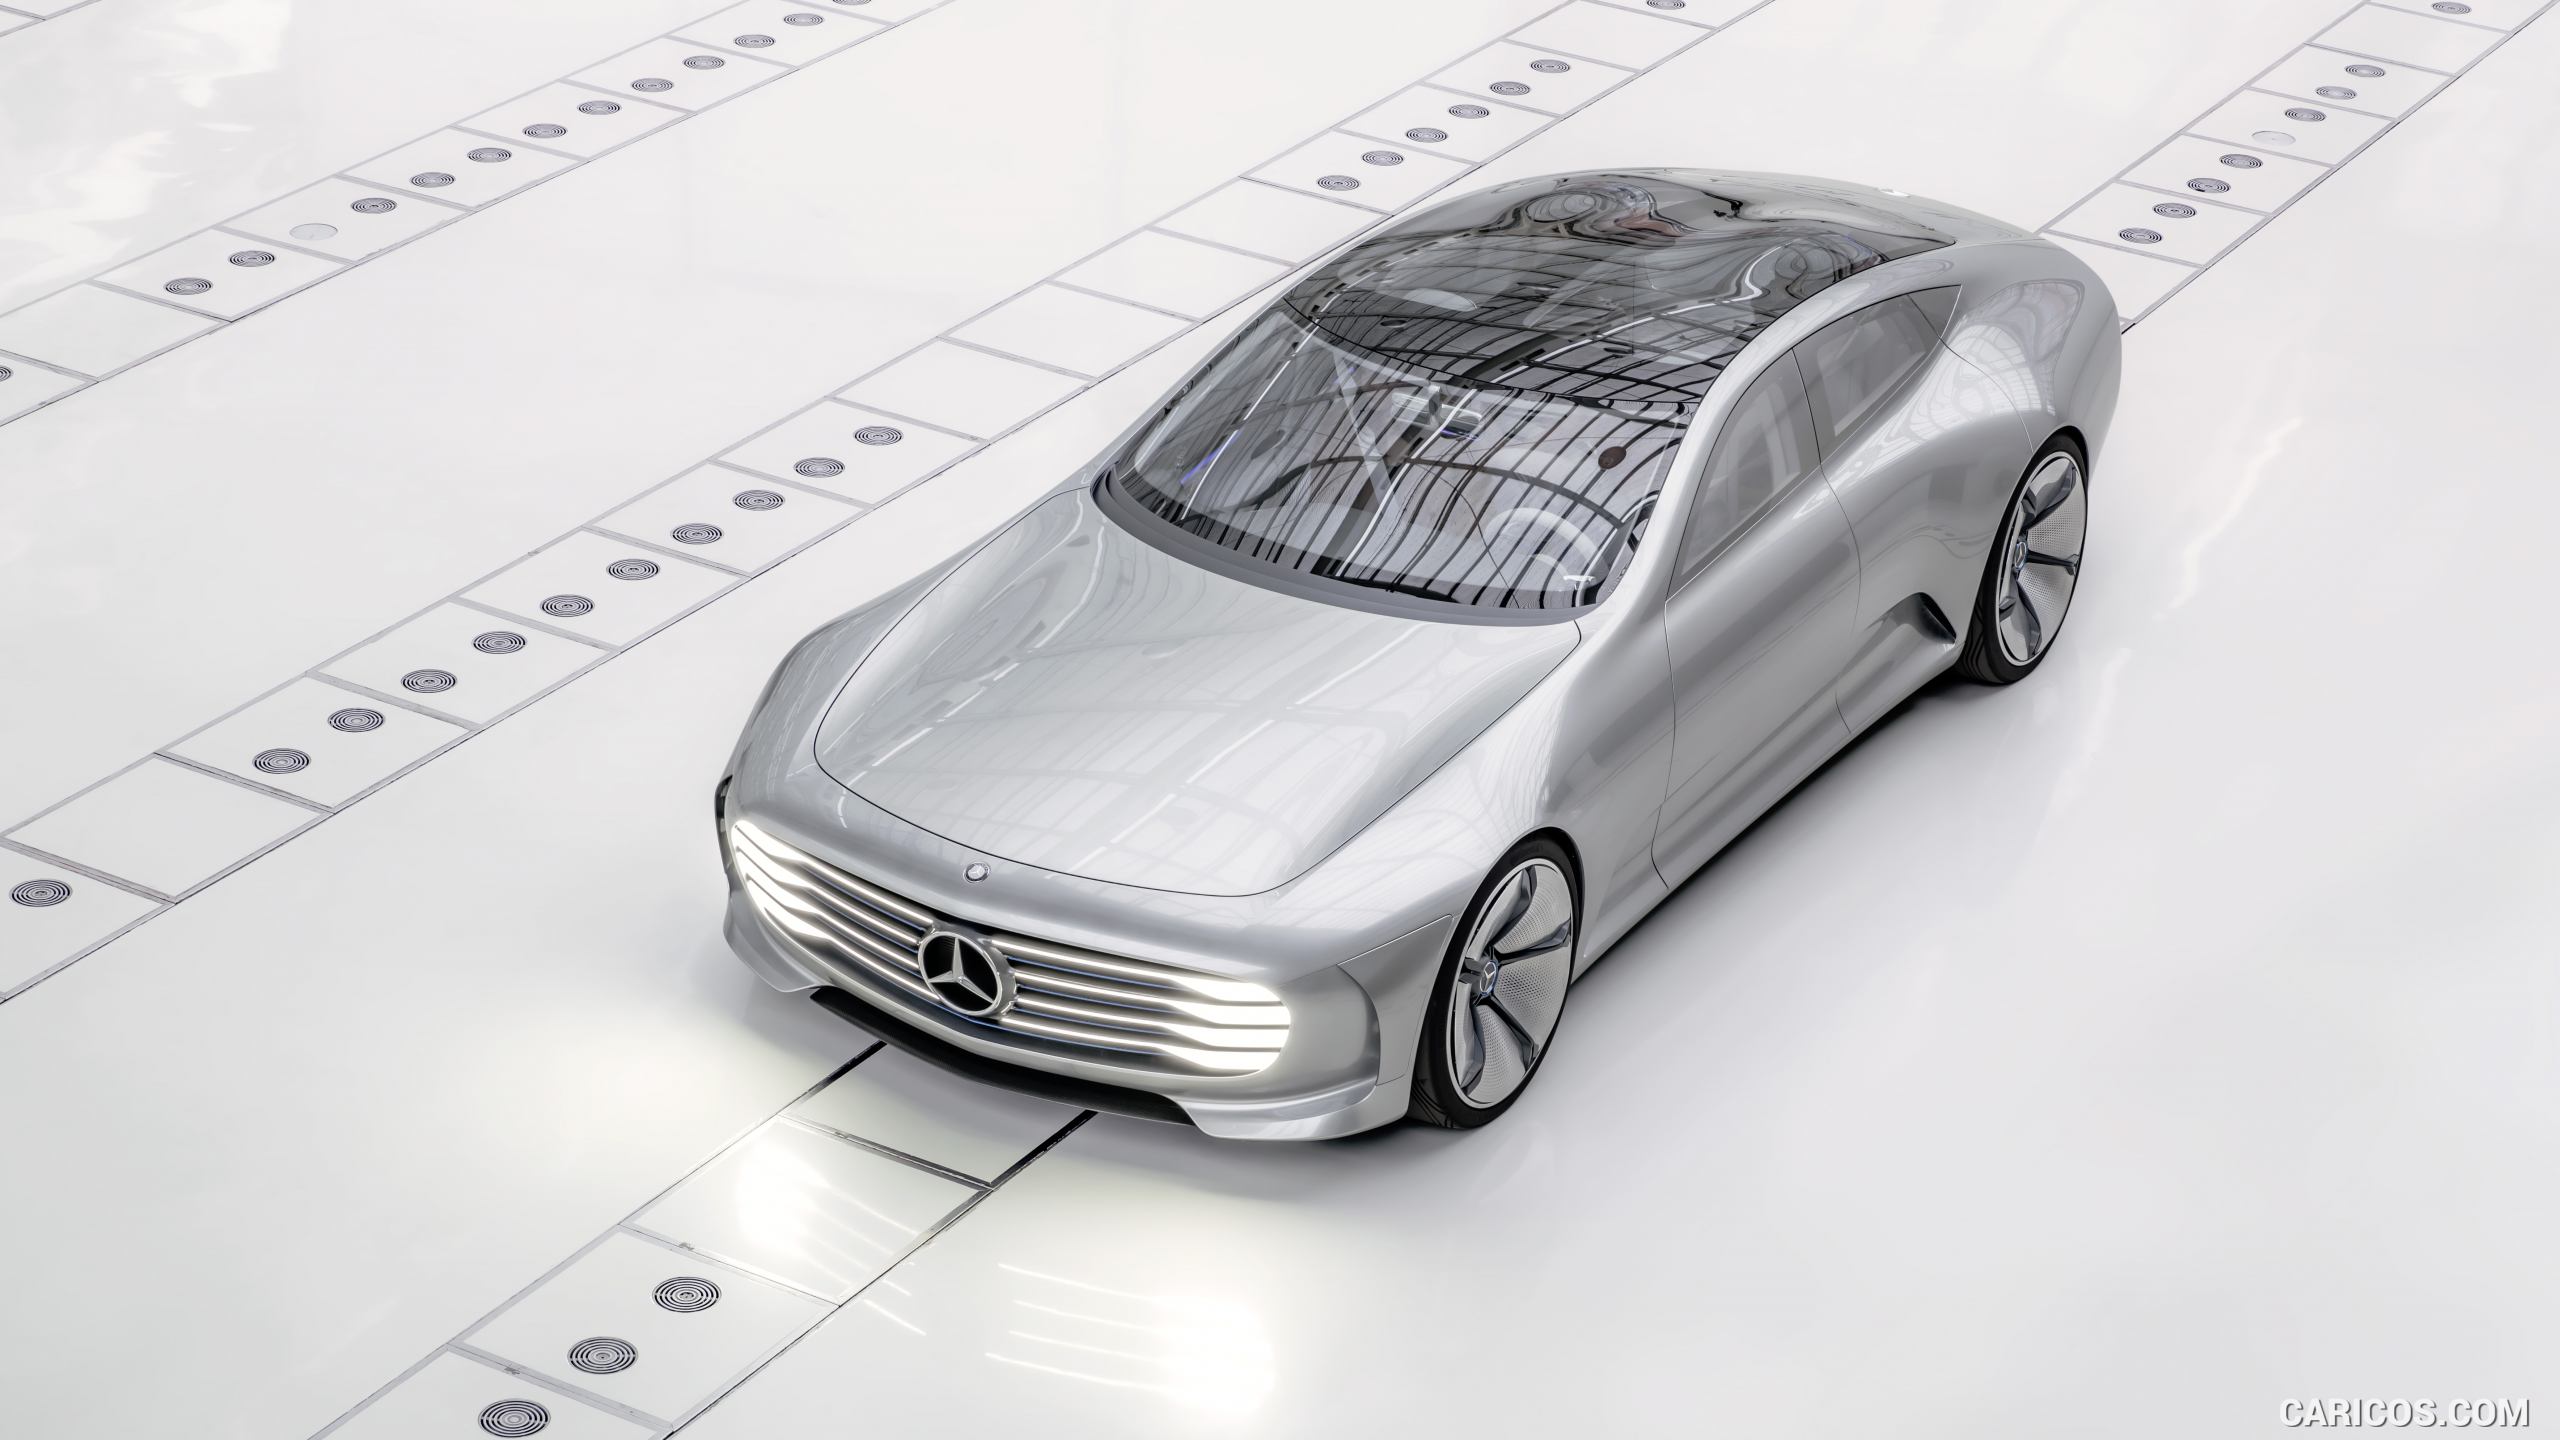 2015 Mercedes-Benz Concept IAA (Intelligent Aerodynamic Automobile)  - Top, #1 of 49